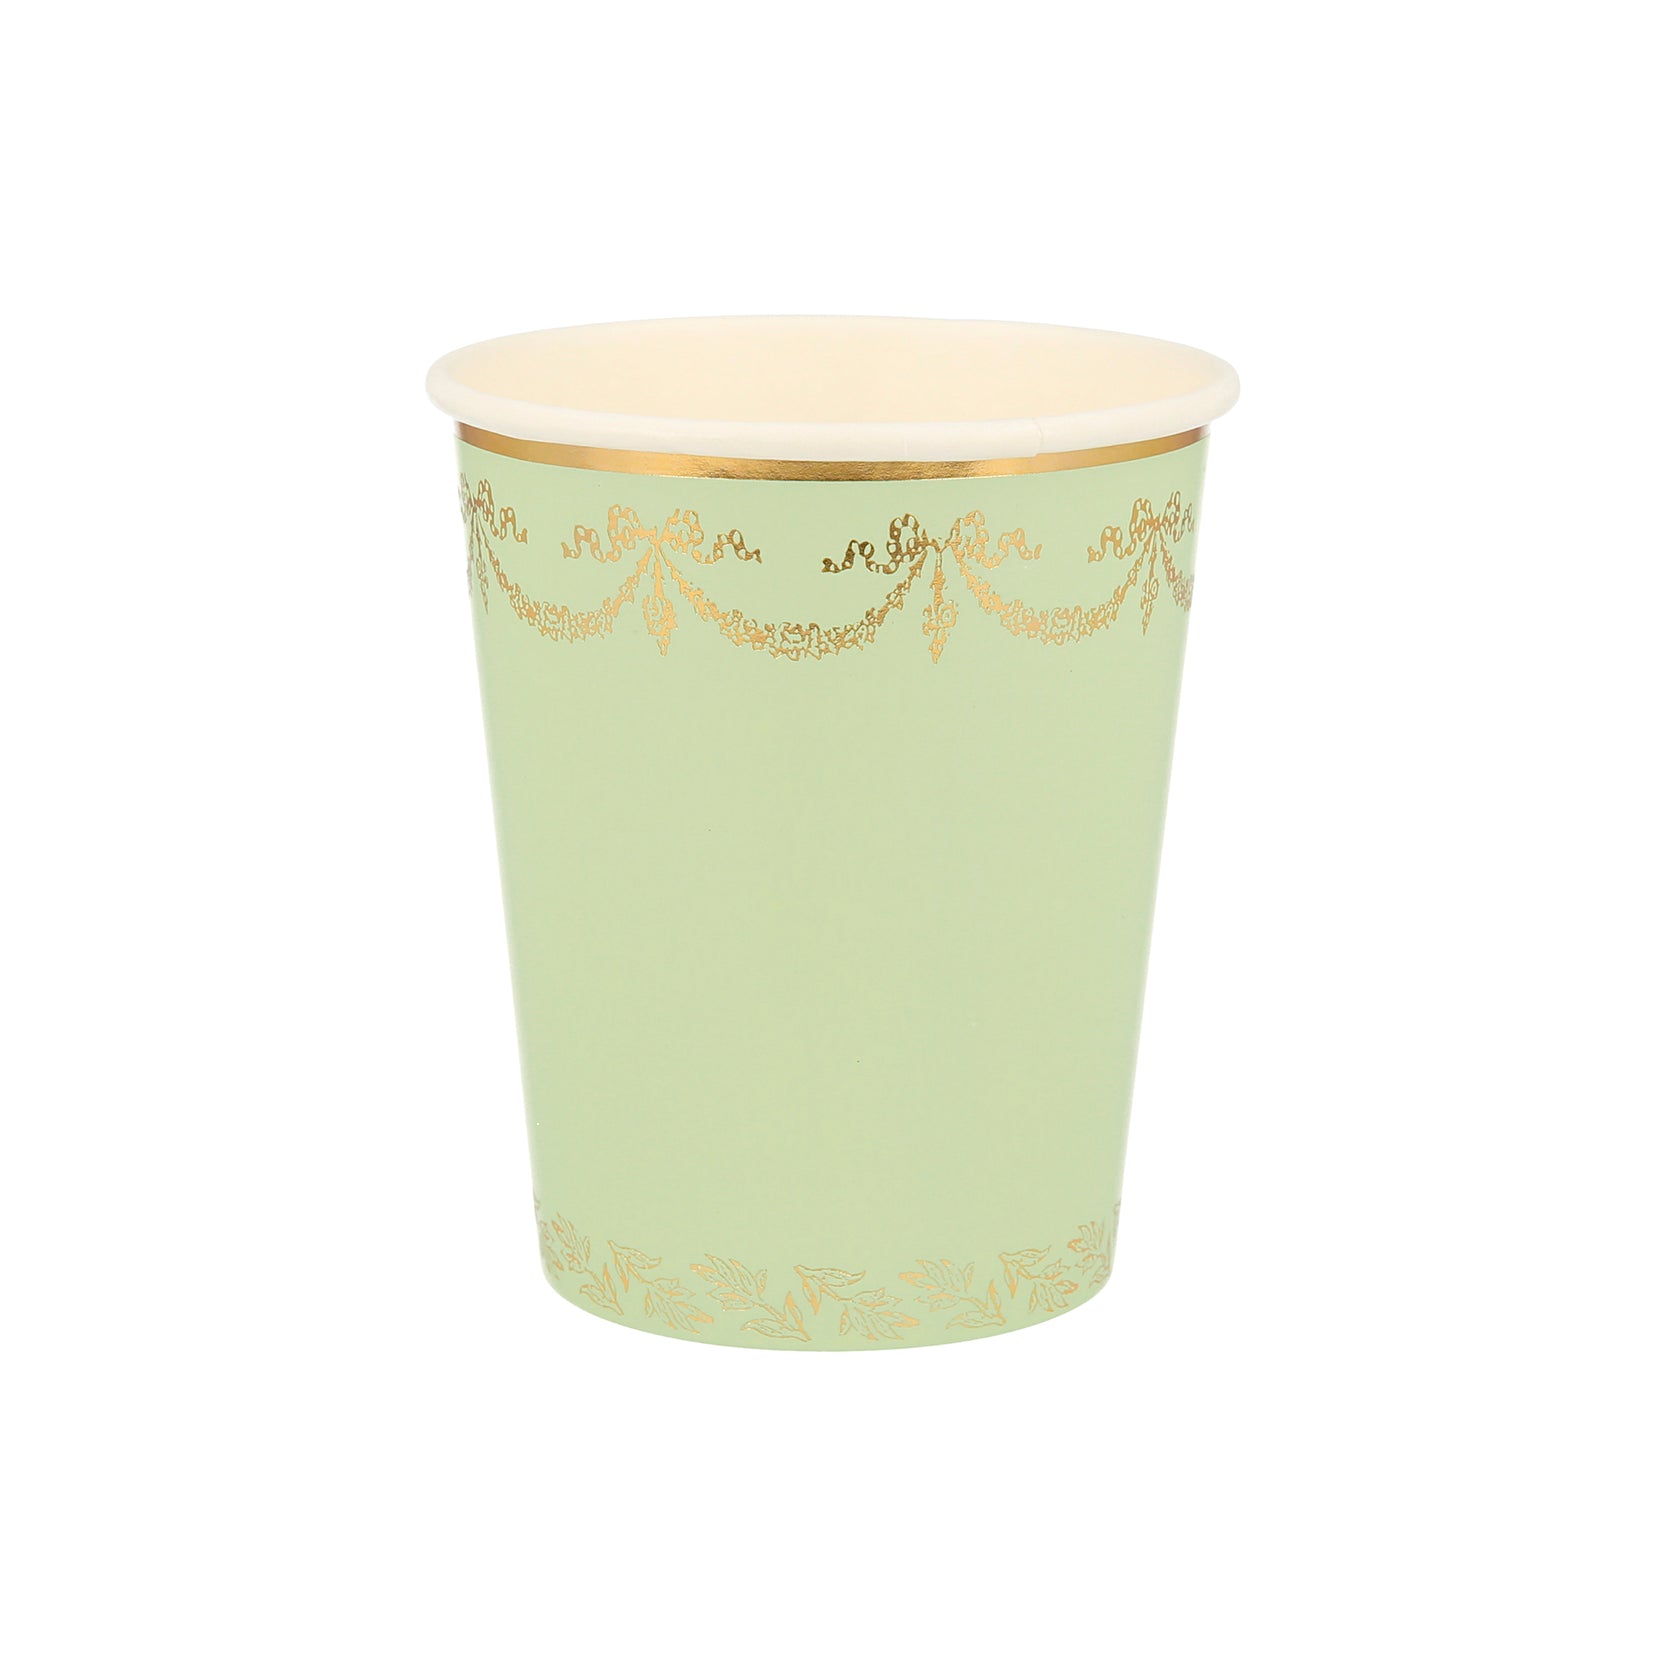 A Ladurée Paris cup with gold trim, made by Meri Meri.